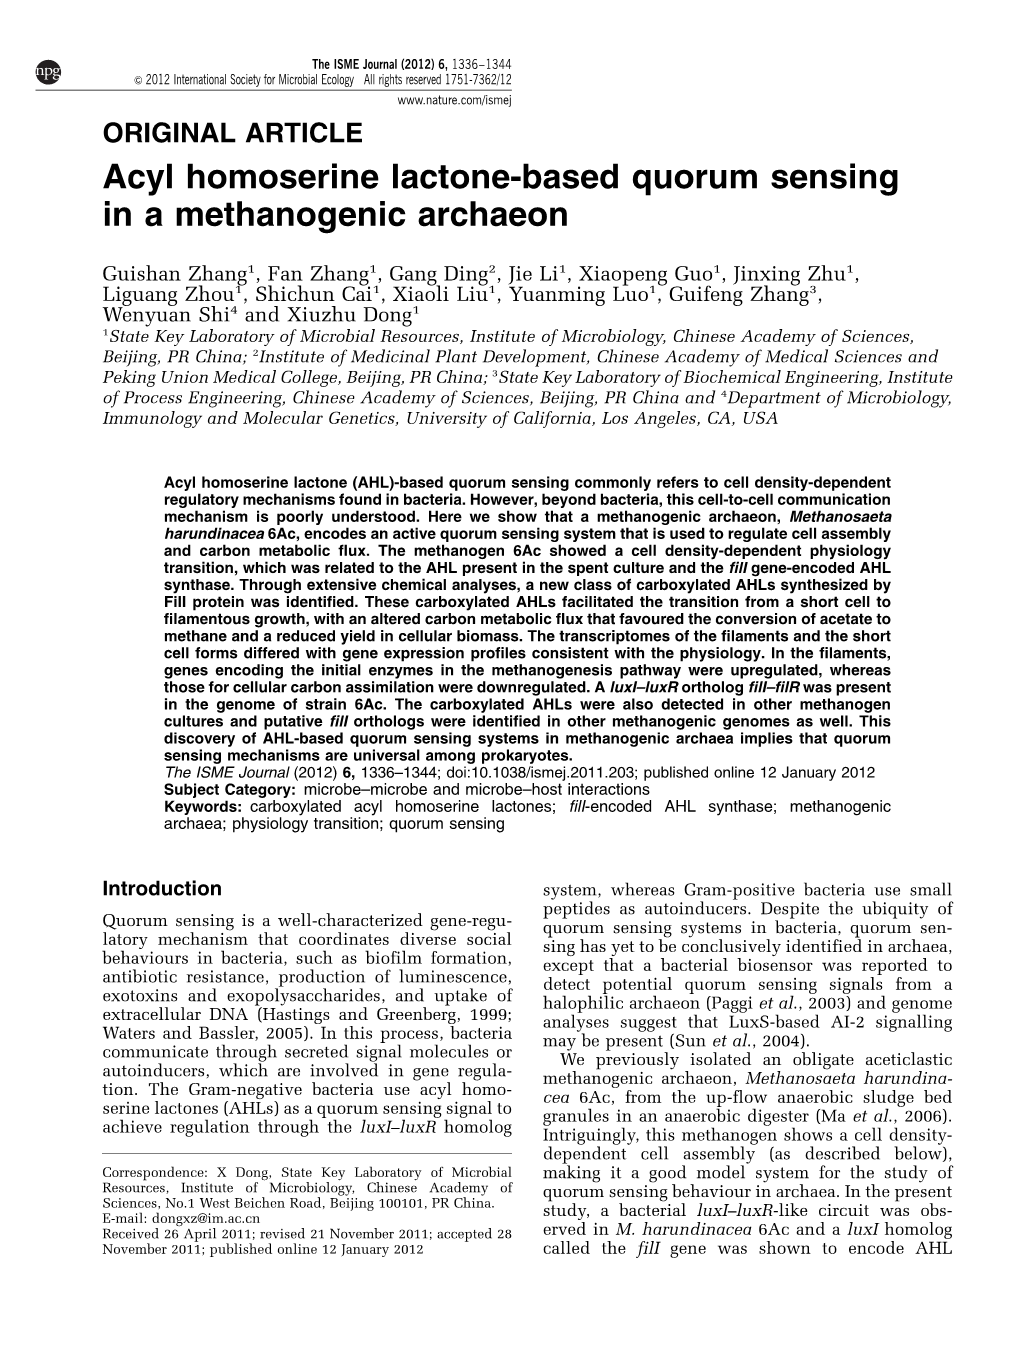 Acyl Homoserine Lactone-Based Quorum Sensing in a Methanogenic Archaeon